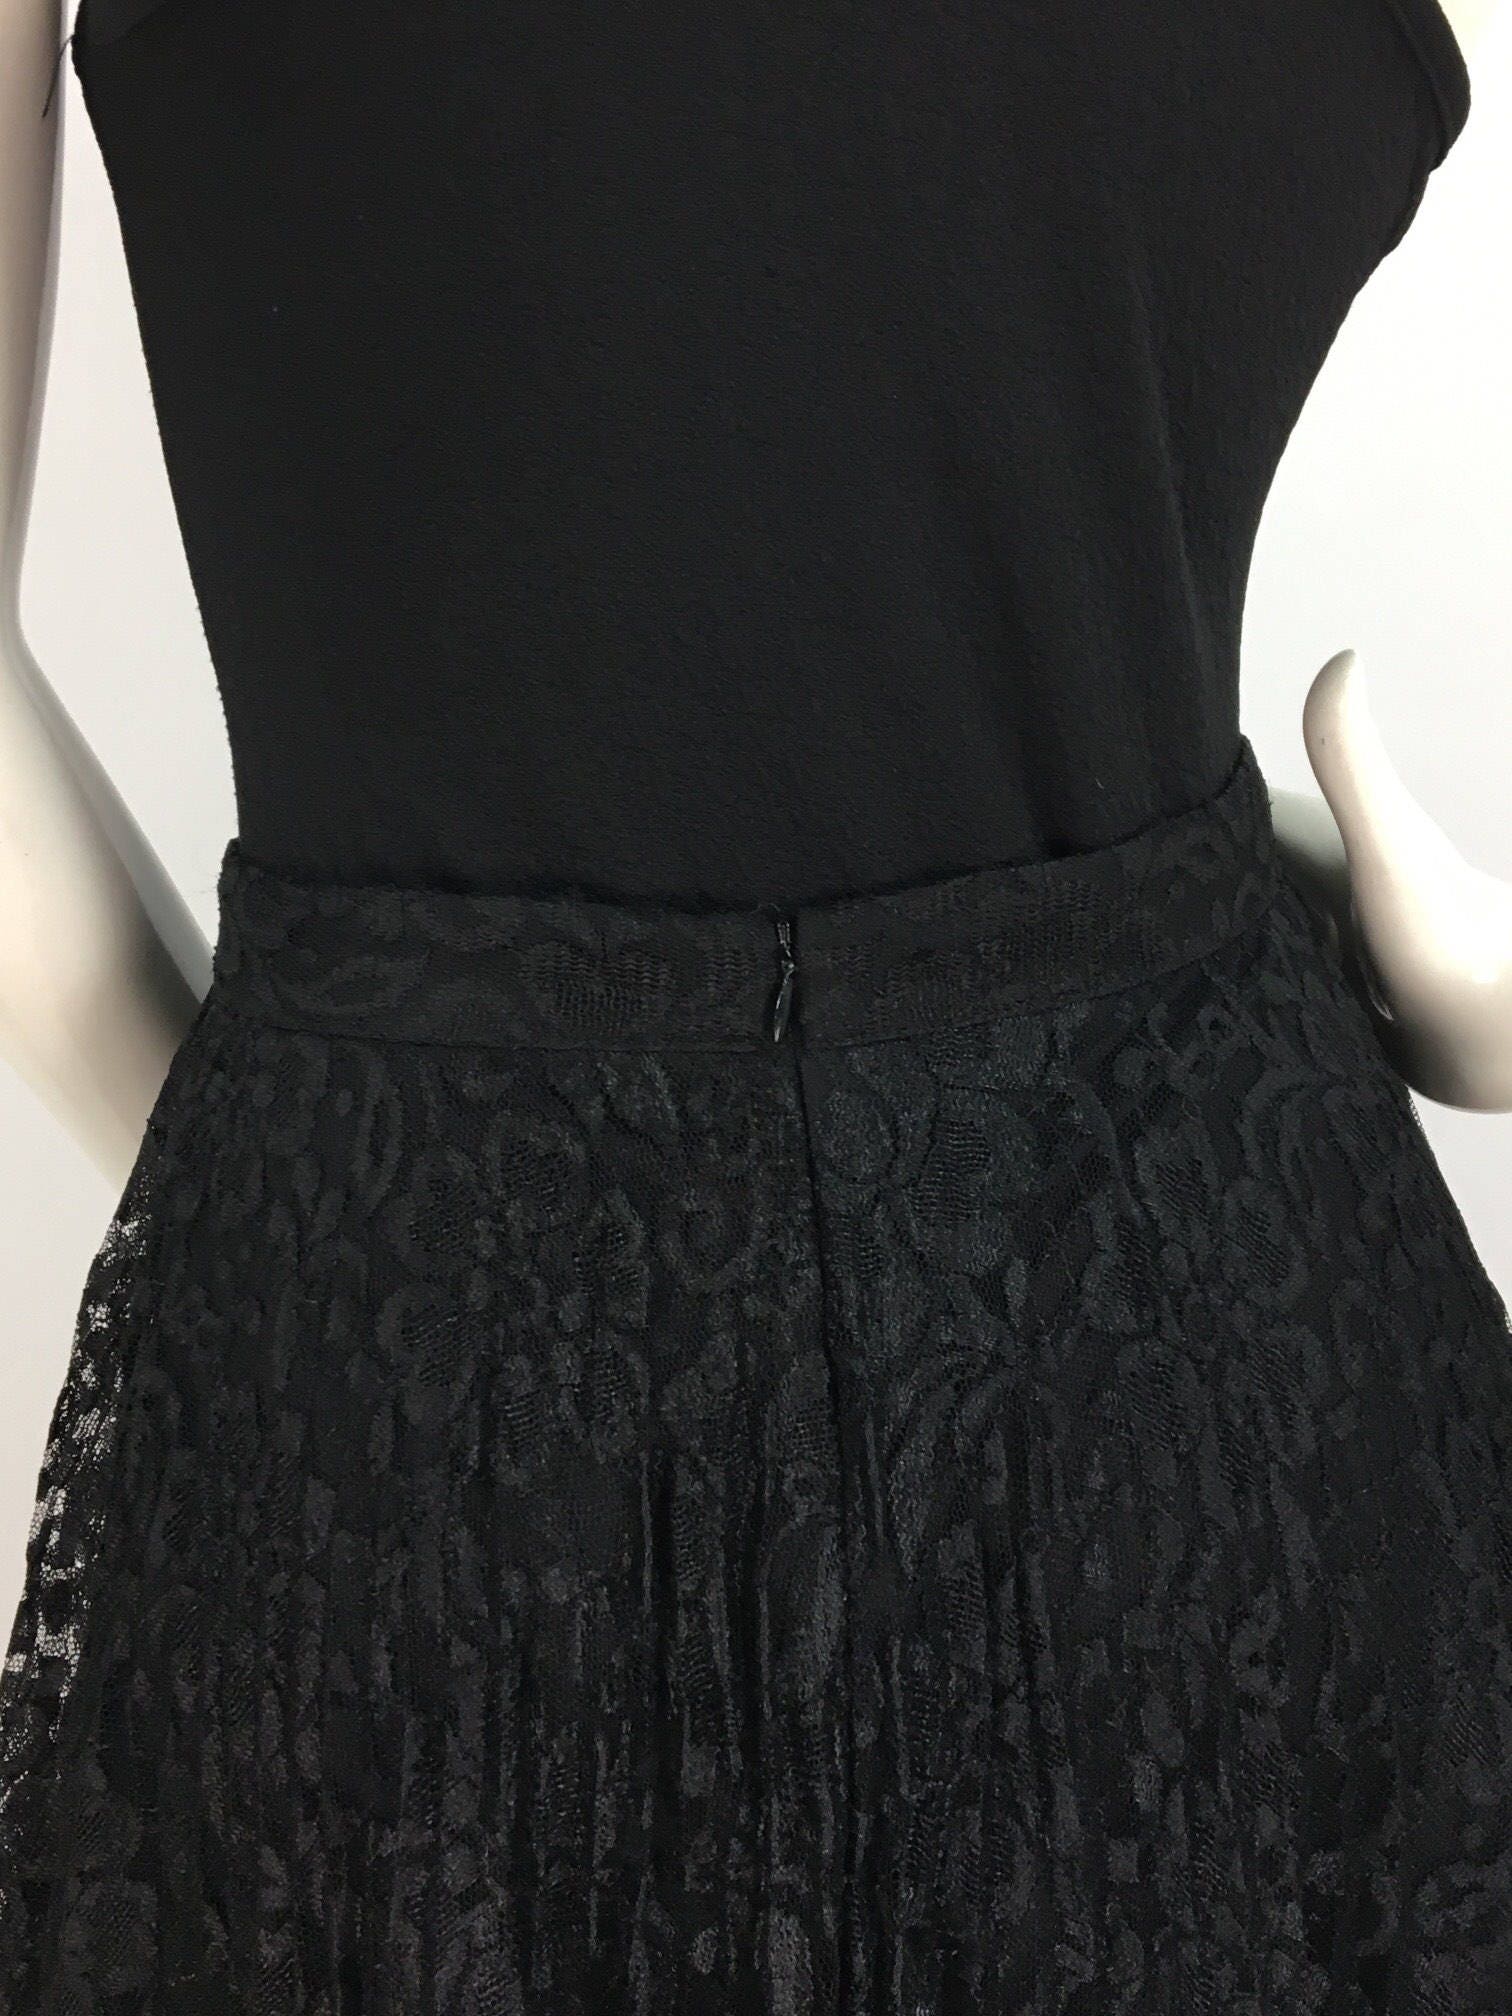 Vintage 80s Black Lace Lined Skirt - Etsy